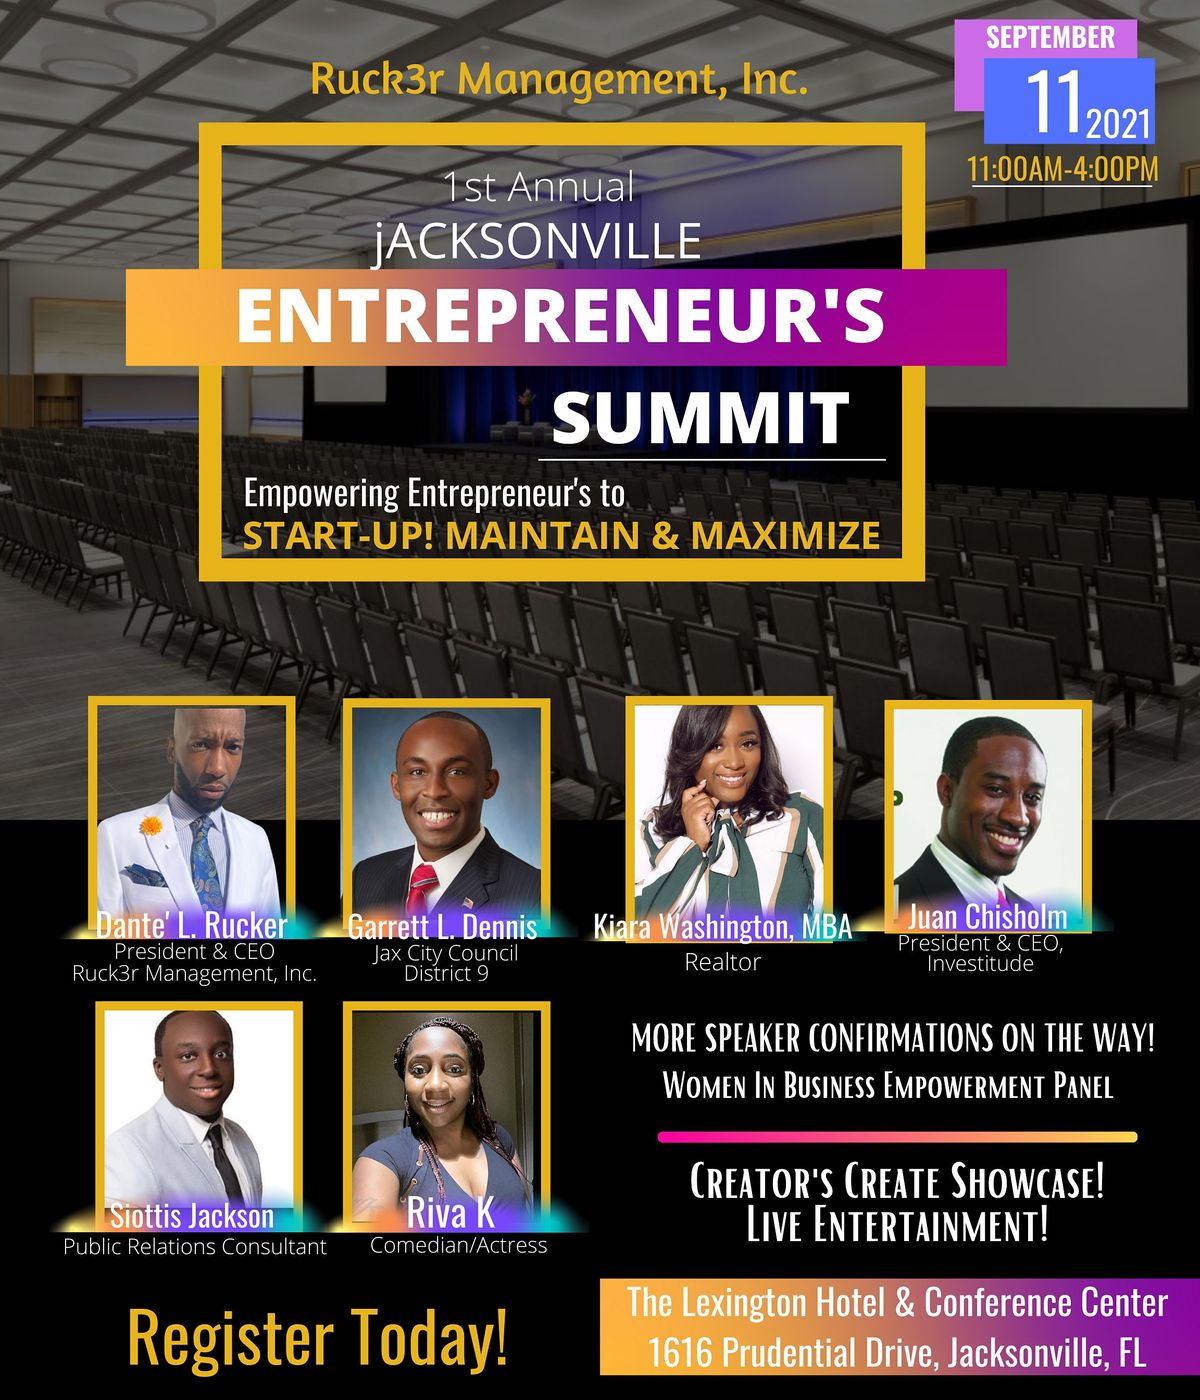 Copy of 1st Annual Jacksonville Entrepreneur's Summit